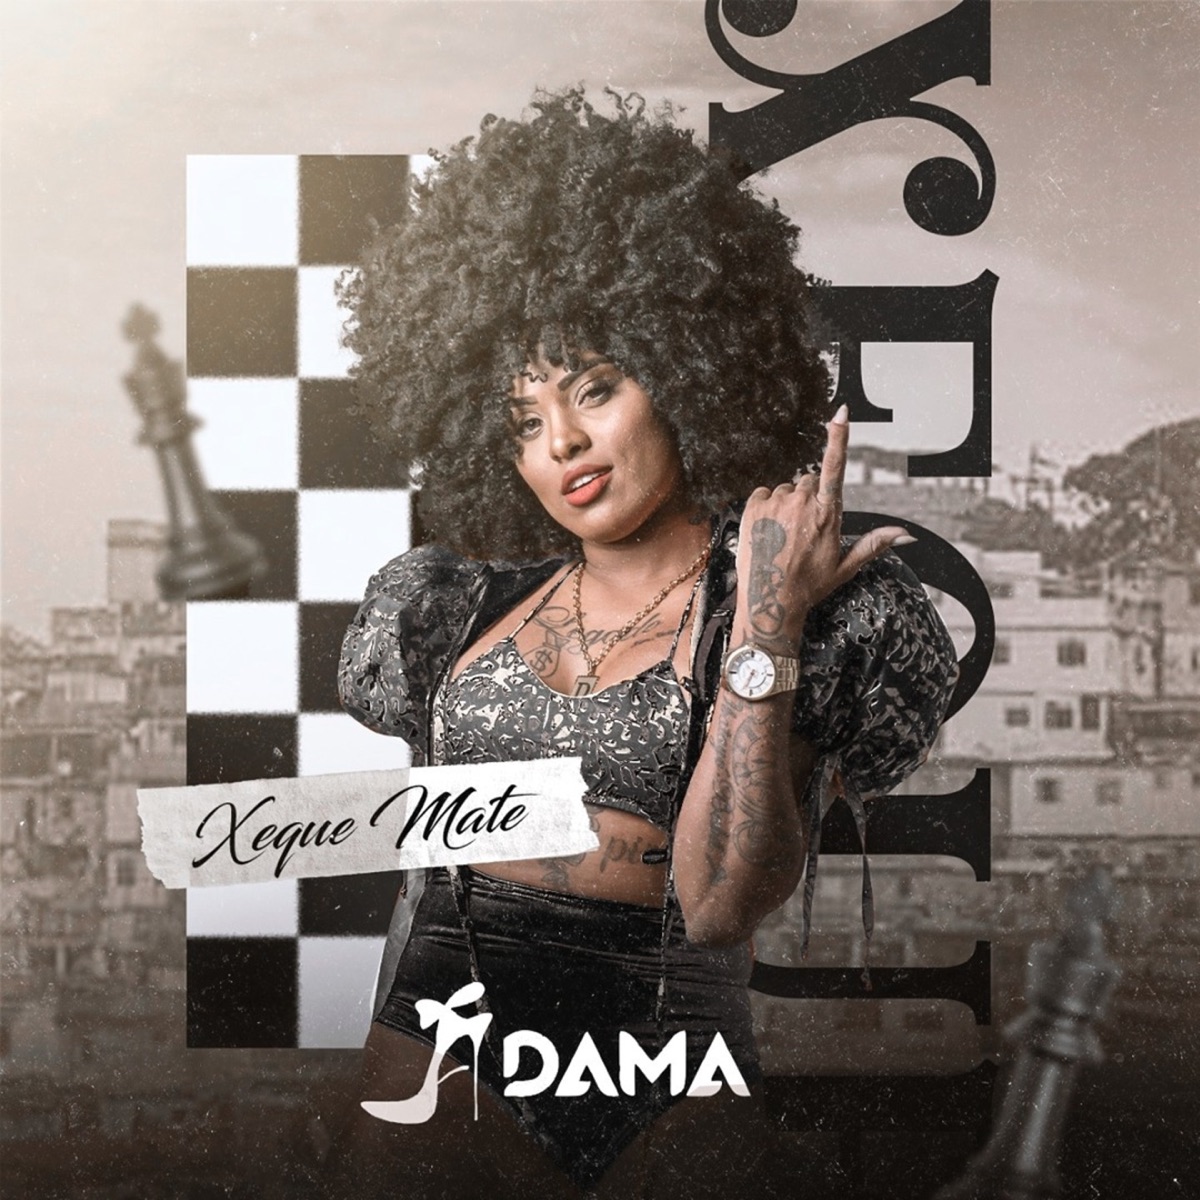 Soca Fofo - Single - Album by DJ NM - Apple Music